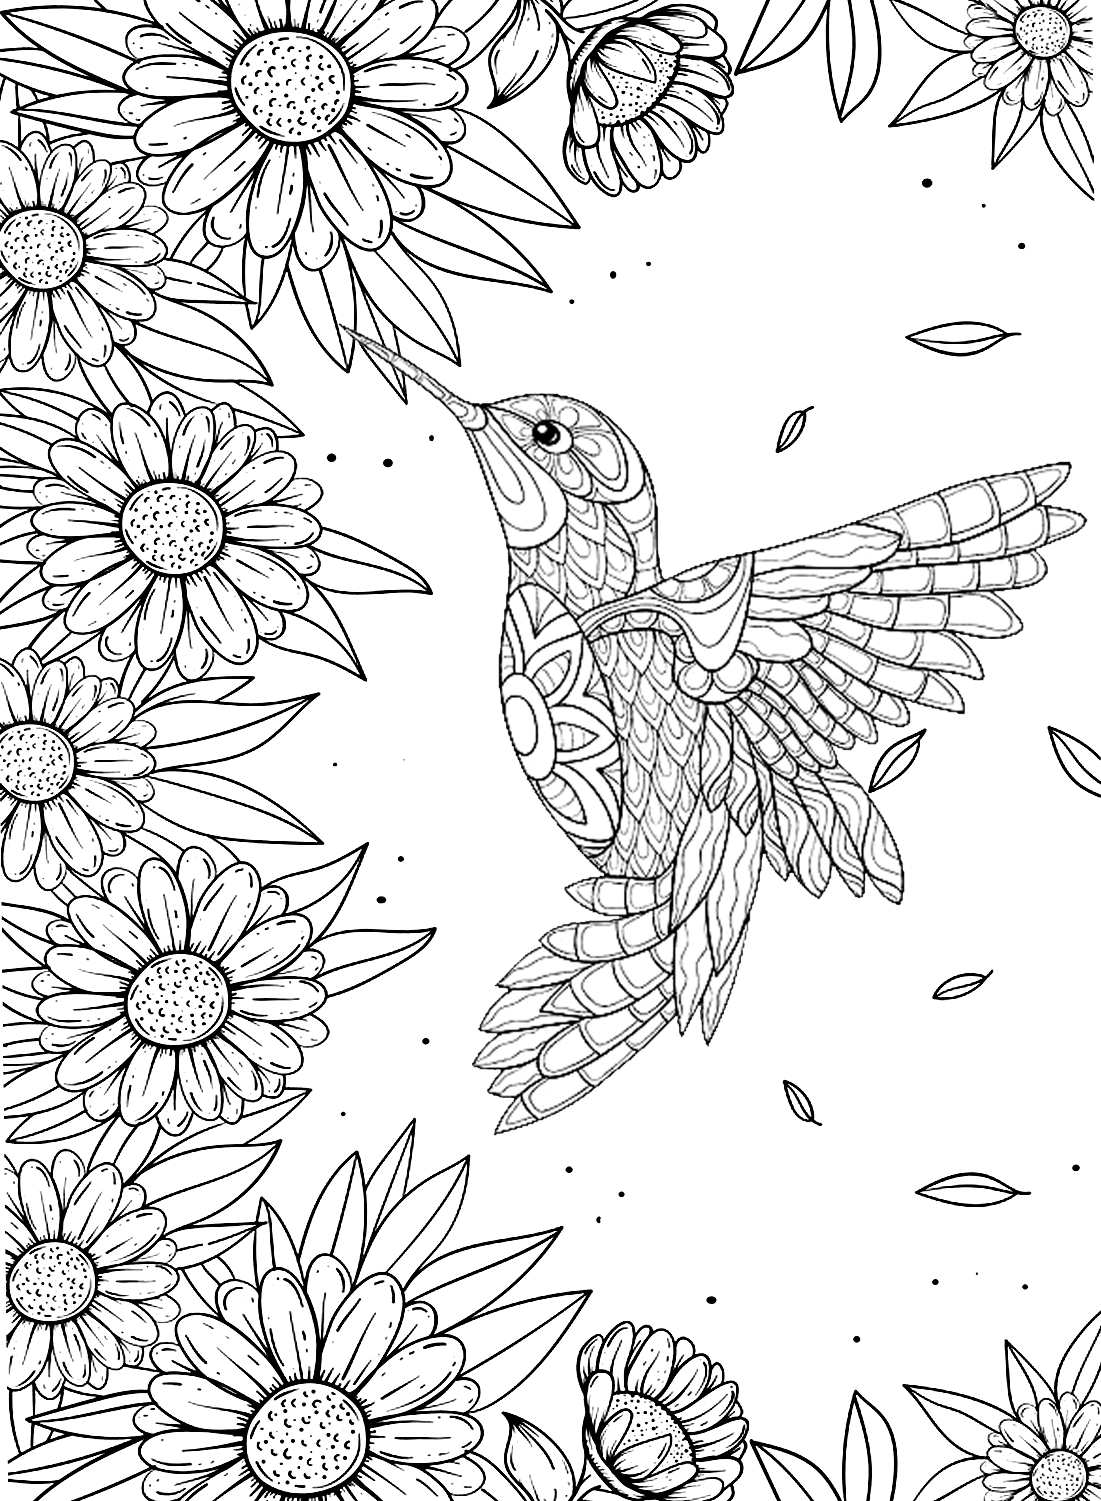 Раскраска Колибри в технике дзентангл от Hummingbird для печати